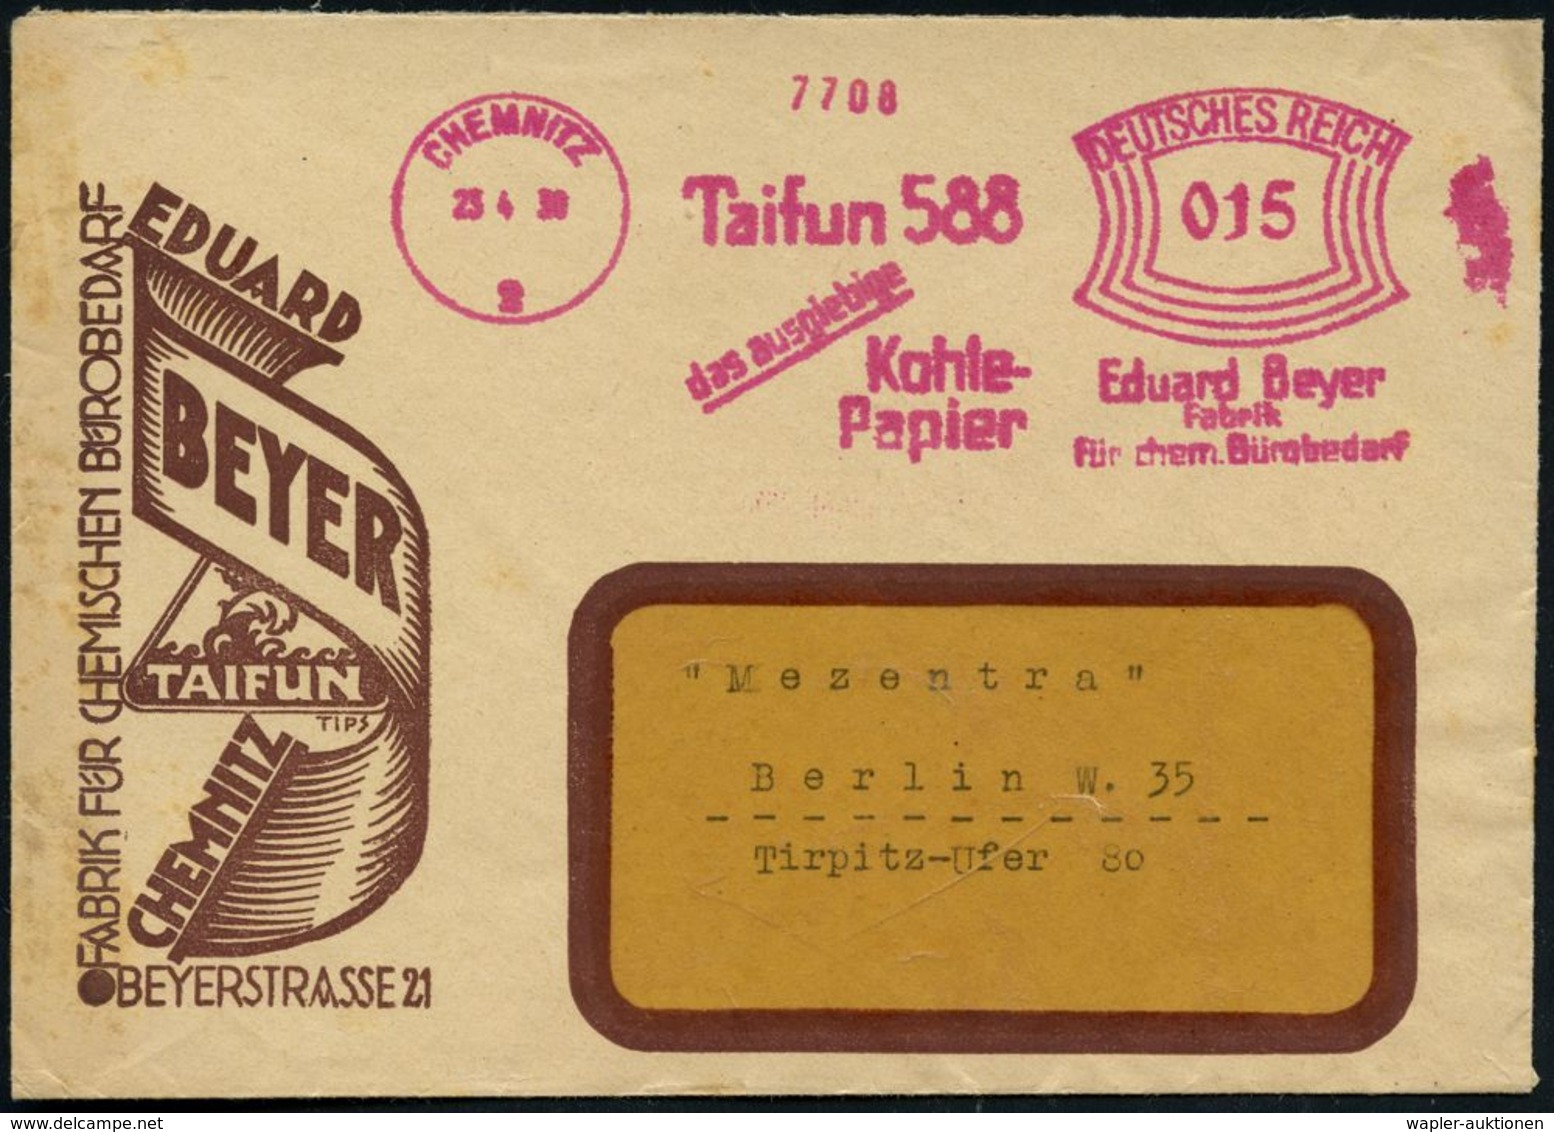 CHEMNITZ/ 2/ Taifun 588/ Das Ausgiebige/ Kohle-/ Papier/ Eduard Beyer.. 1930 (23.4.) Rotviol. AFS Auf Reklame-Bf.: EDUAR - Non Classificati